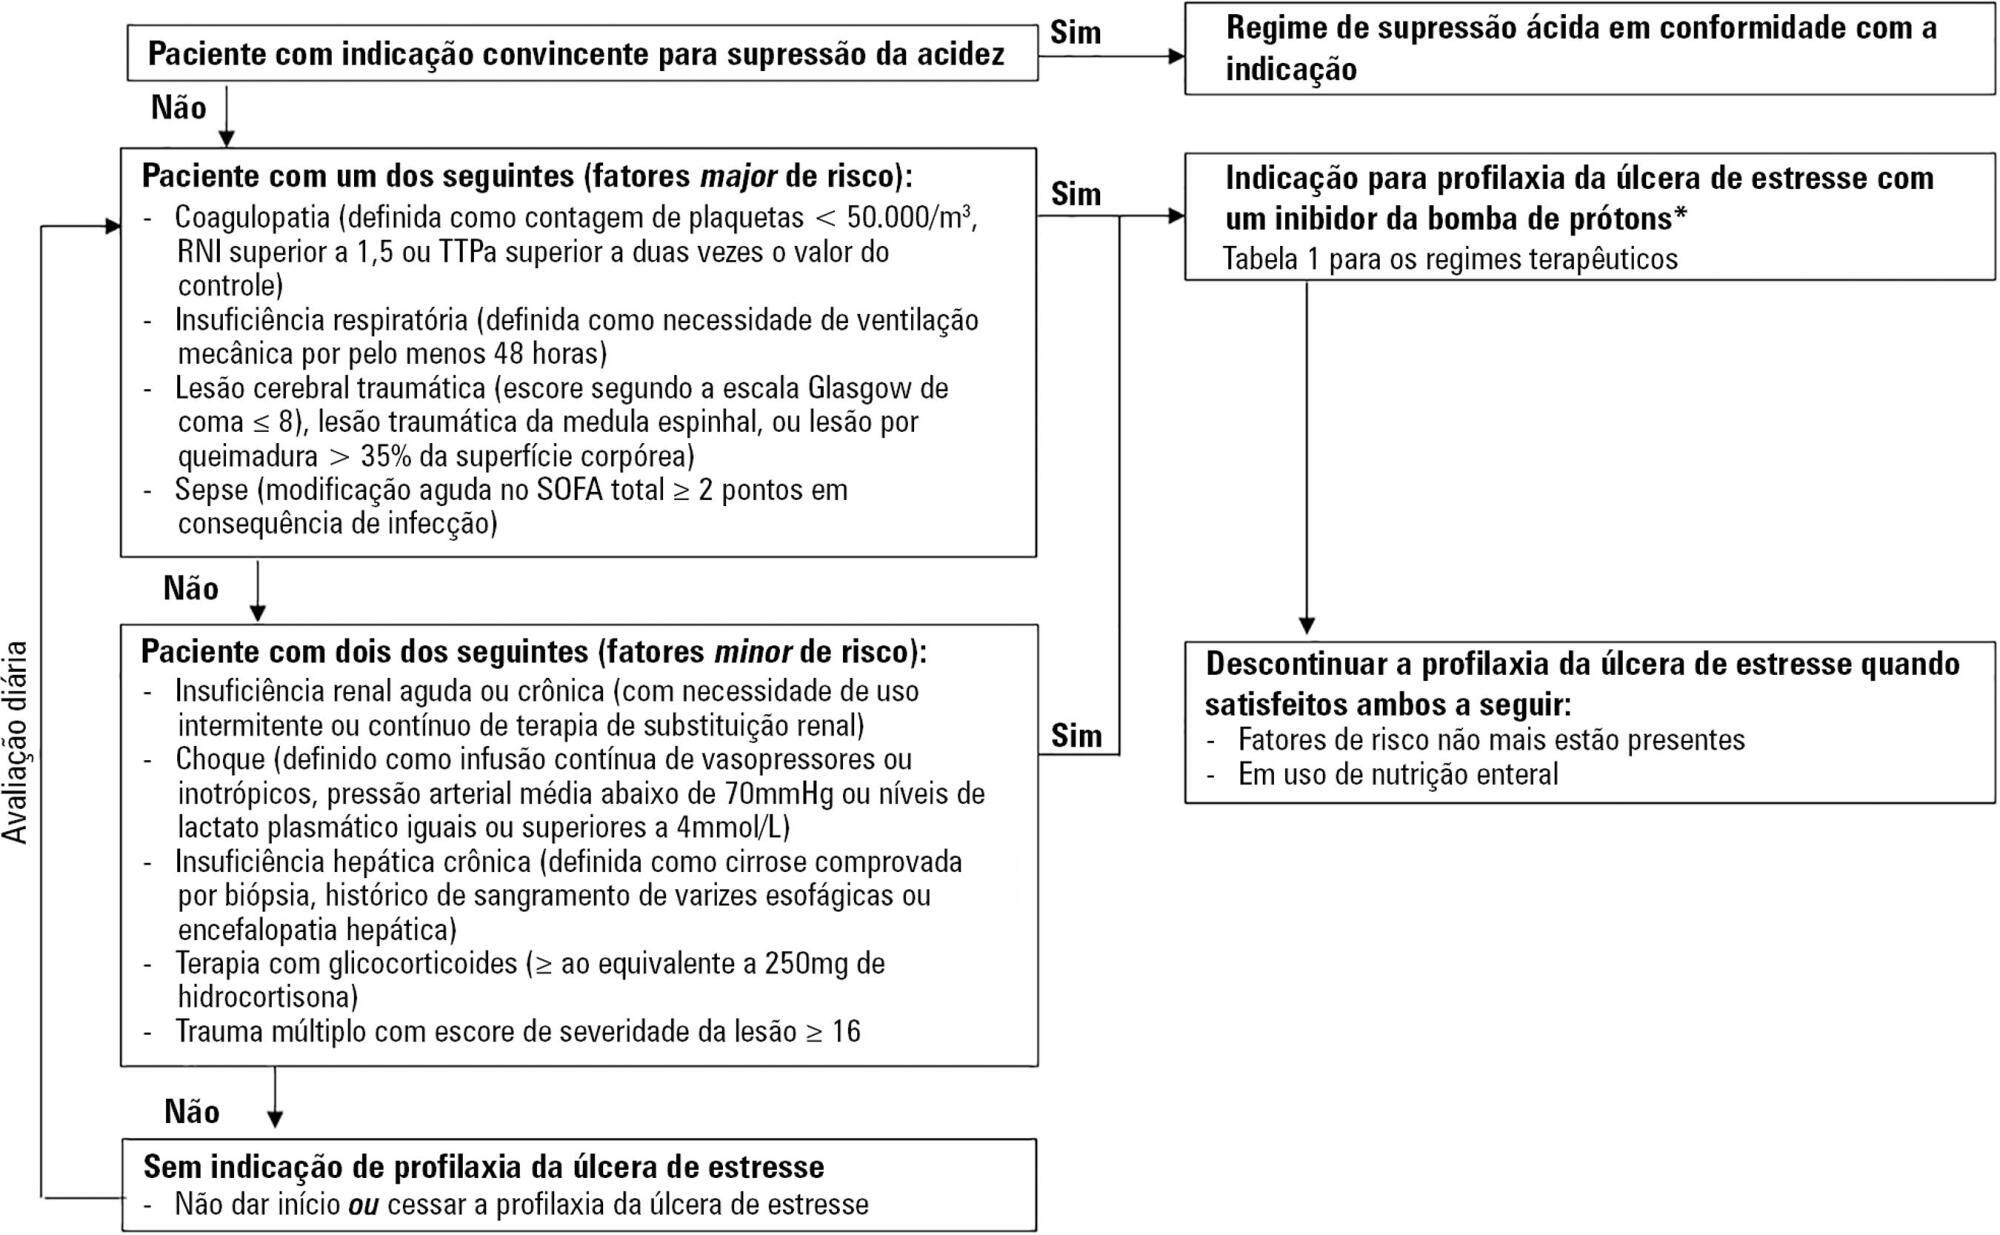 Sociedade Portuguesa de Cuidados Intensivos guidelines for stress ulcer prophylaxis in the intensive care unit